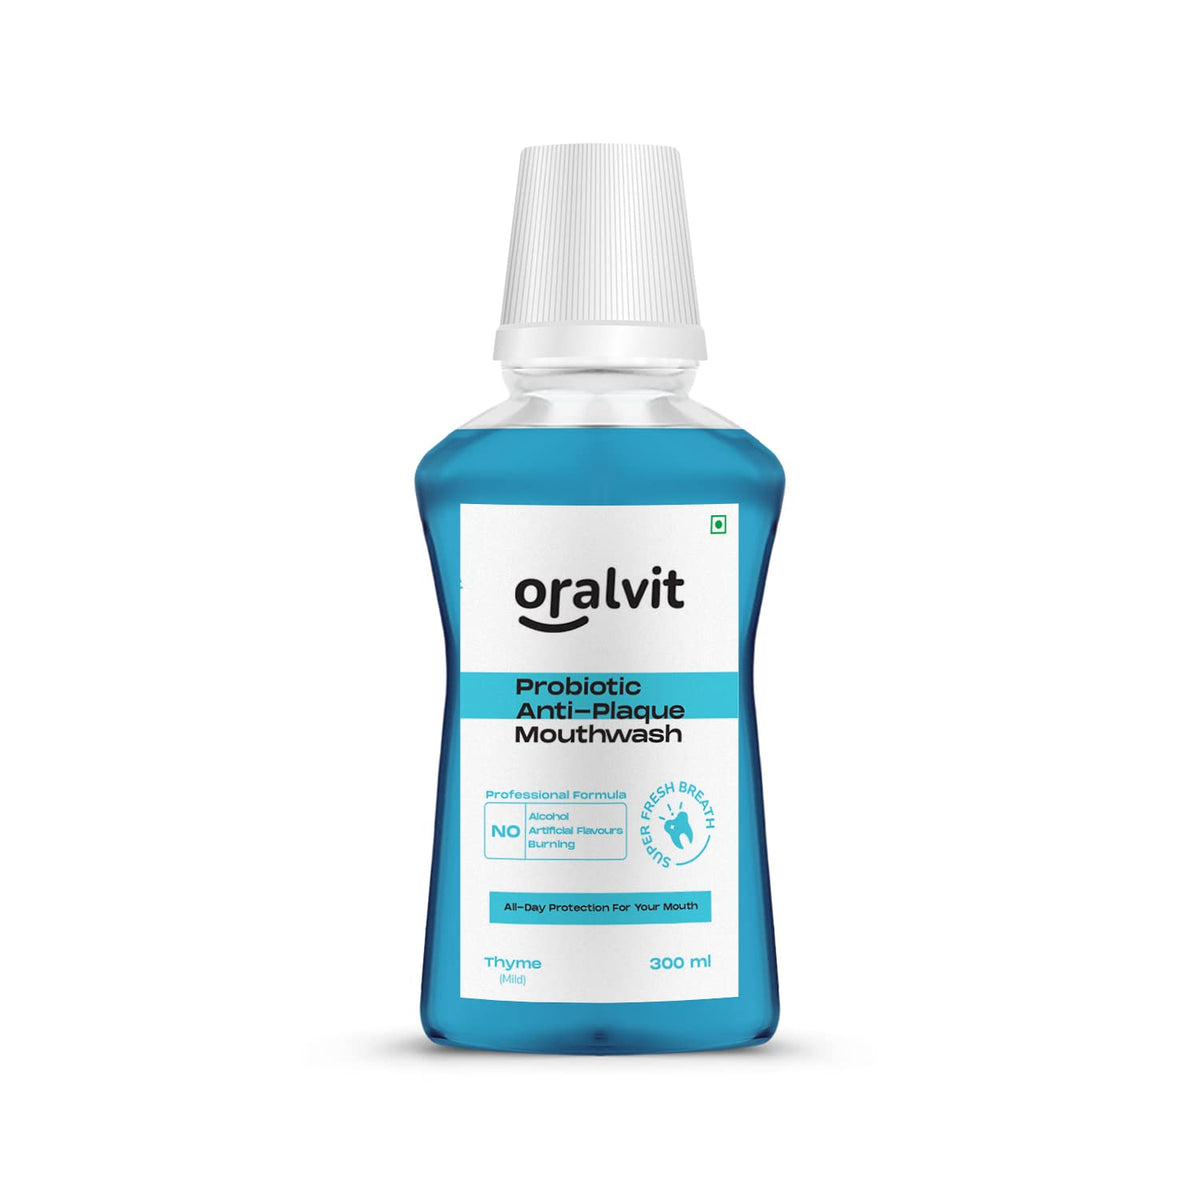 Oralvit Probiotic Anti-Plaque Mouthwash with Mild Thyme | Fights Germs | No Alcohol, No Burning Sensation, No Artificial Flavours |For Men & Women – 300ml